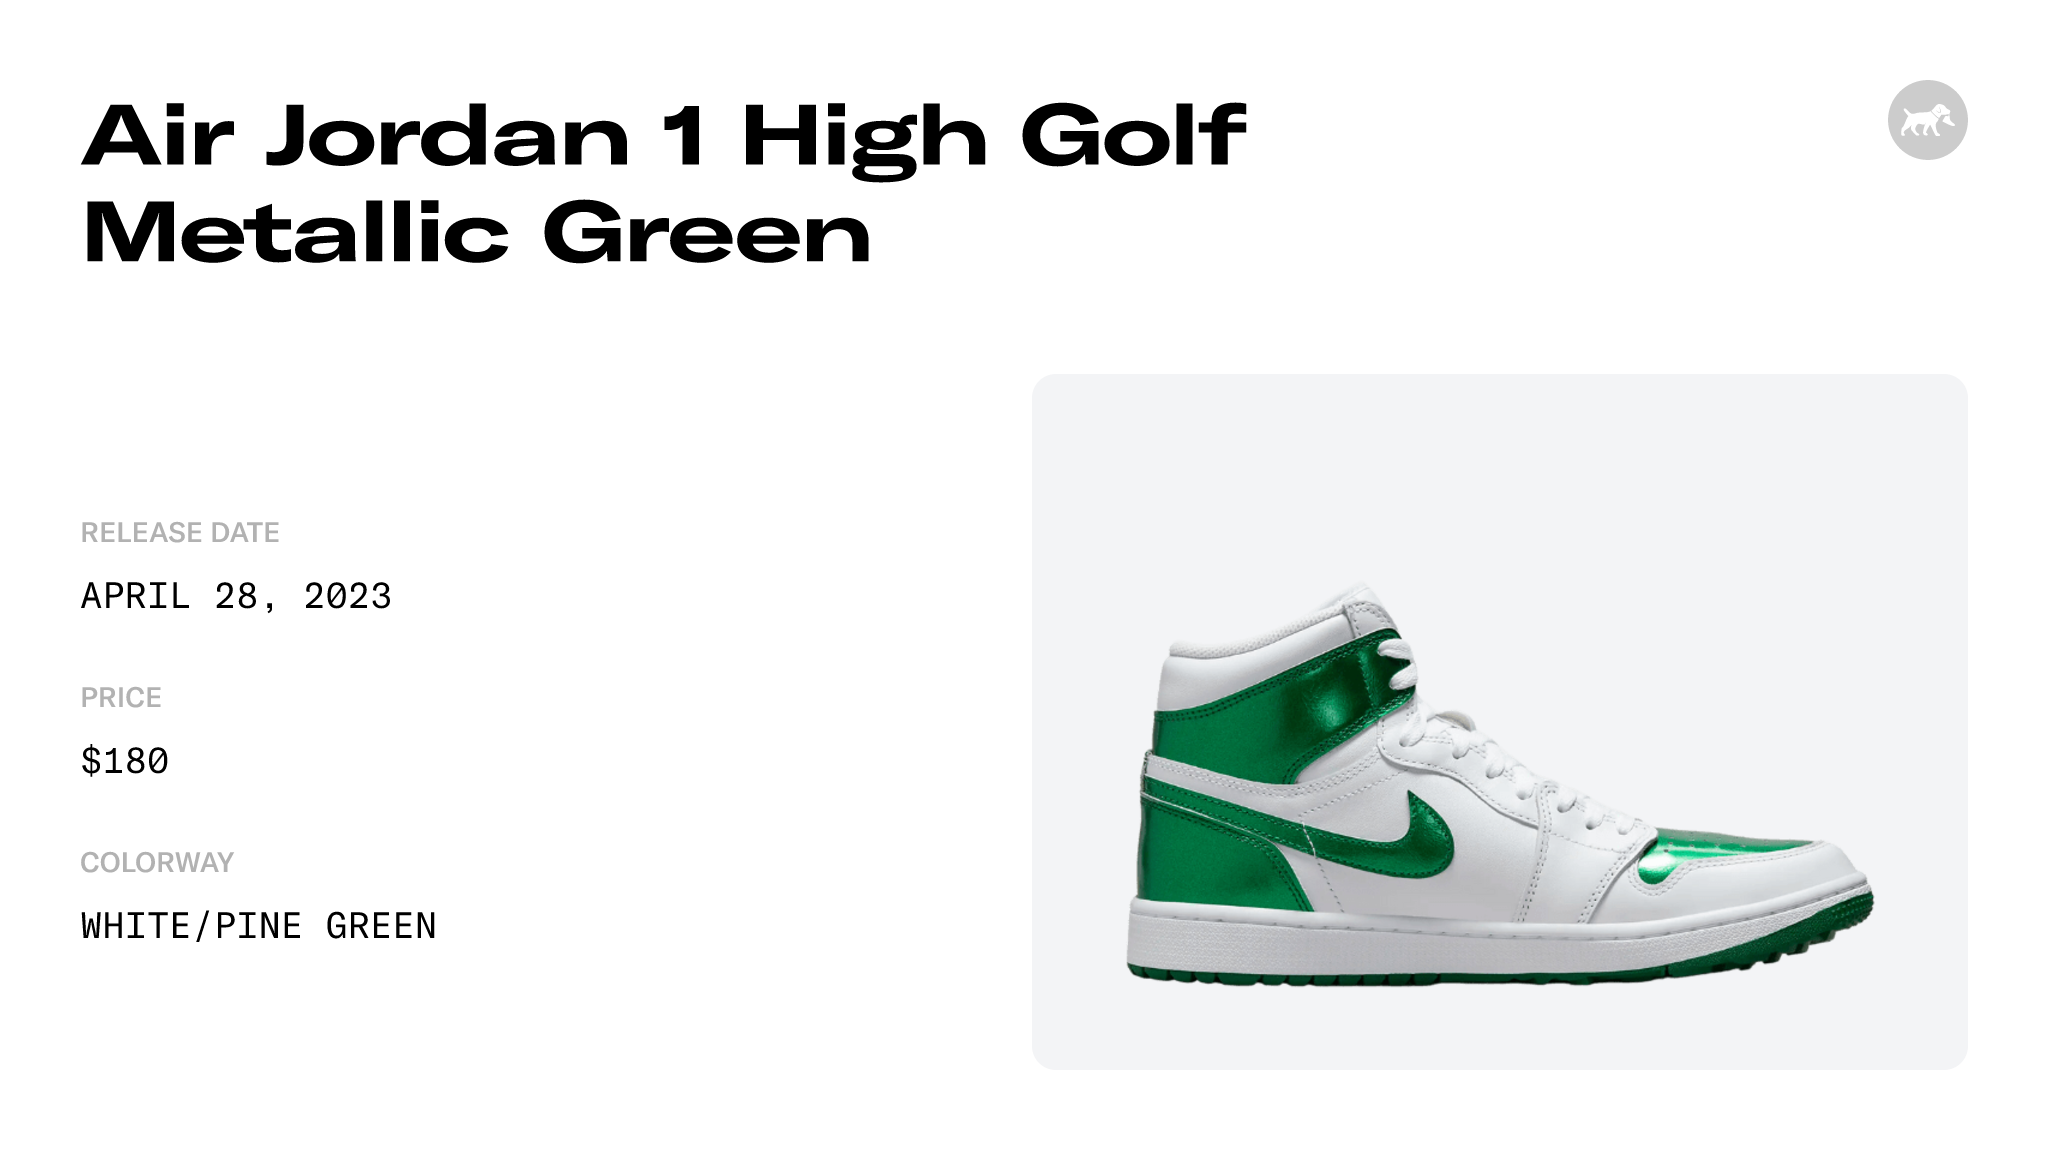 Air Jordan 1 High Golf Metallic Green Raffles and Release Date